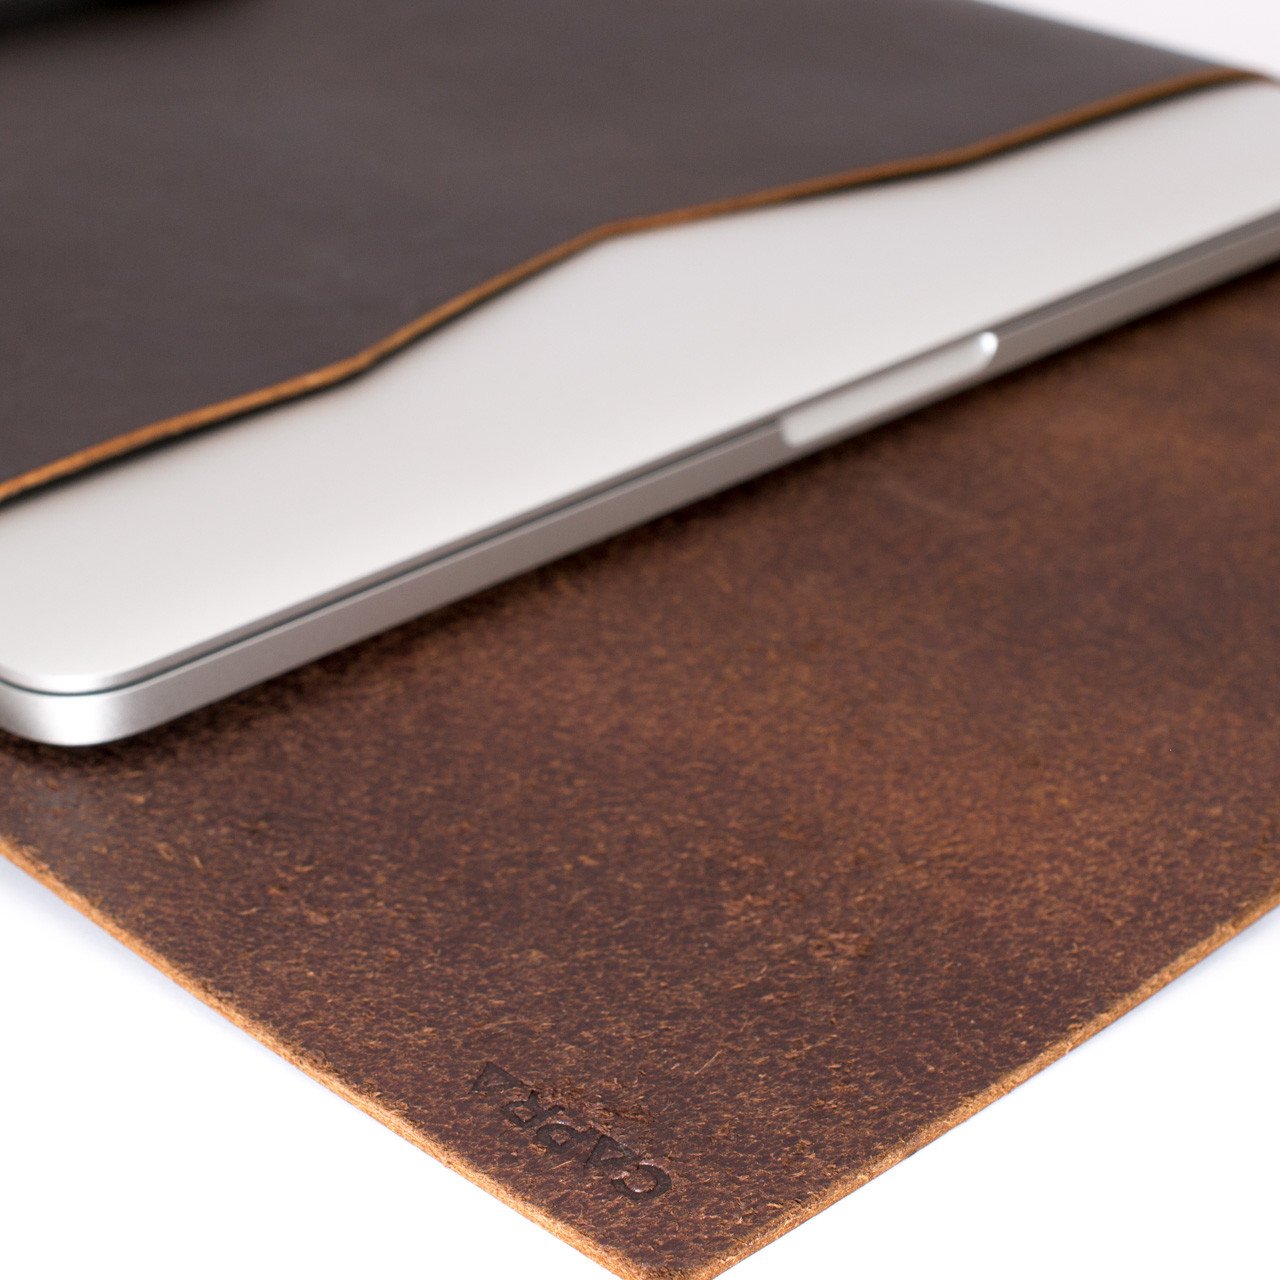 Soft interior. Dark brown leather Macbook pro touch bar sleeve. Designer unique mens cases. Hand stitched Macbook Pro sleeve